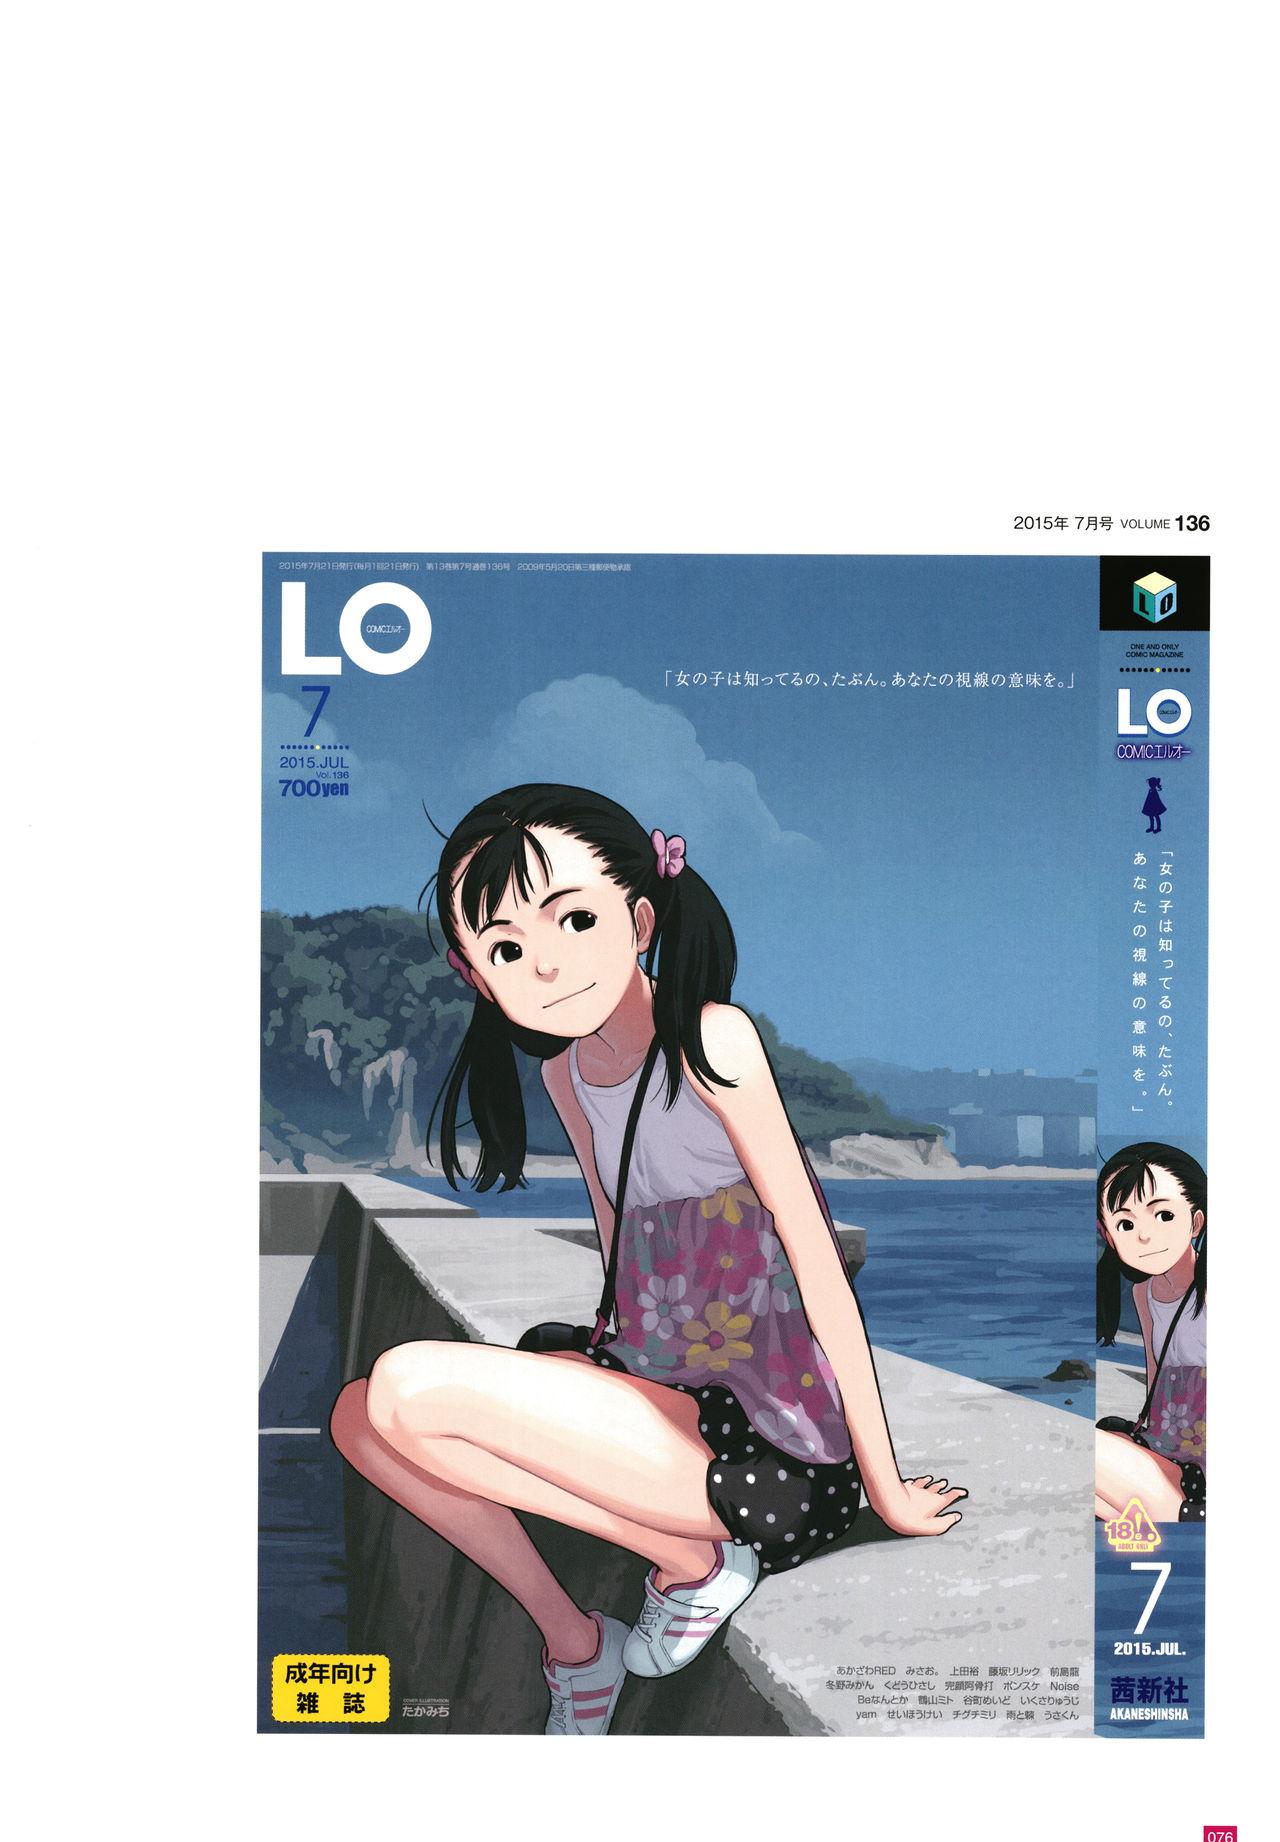 [Takamichi] LO Artbook 2-B TAKAMICHI LO-fi WORKS 78